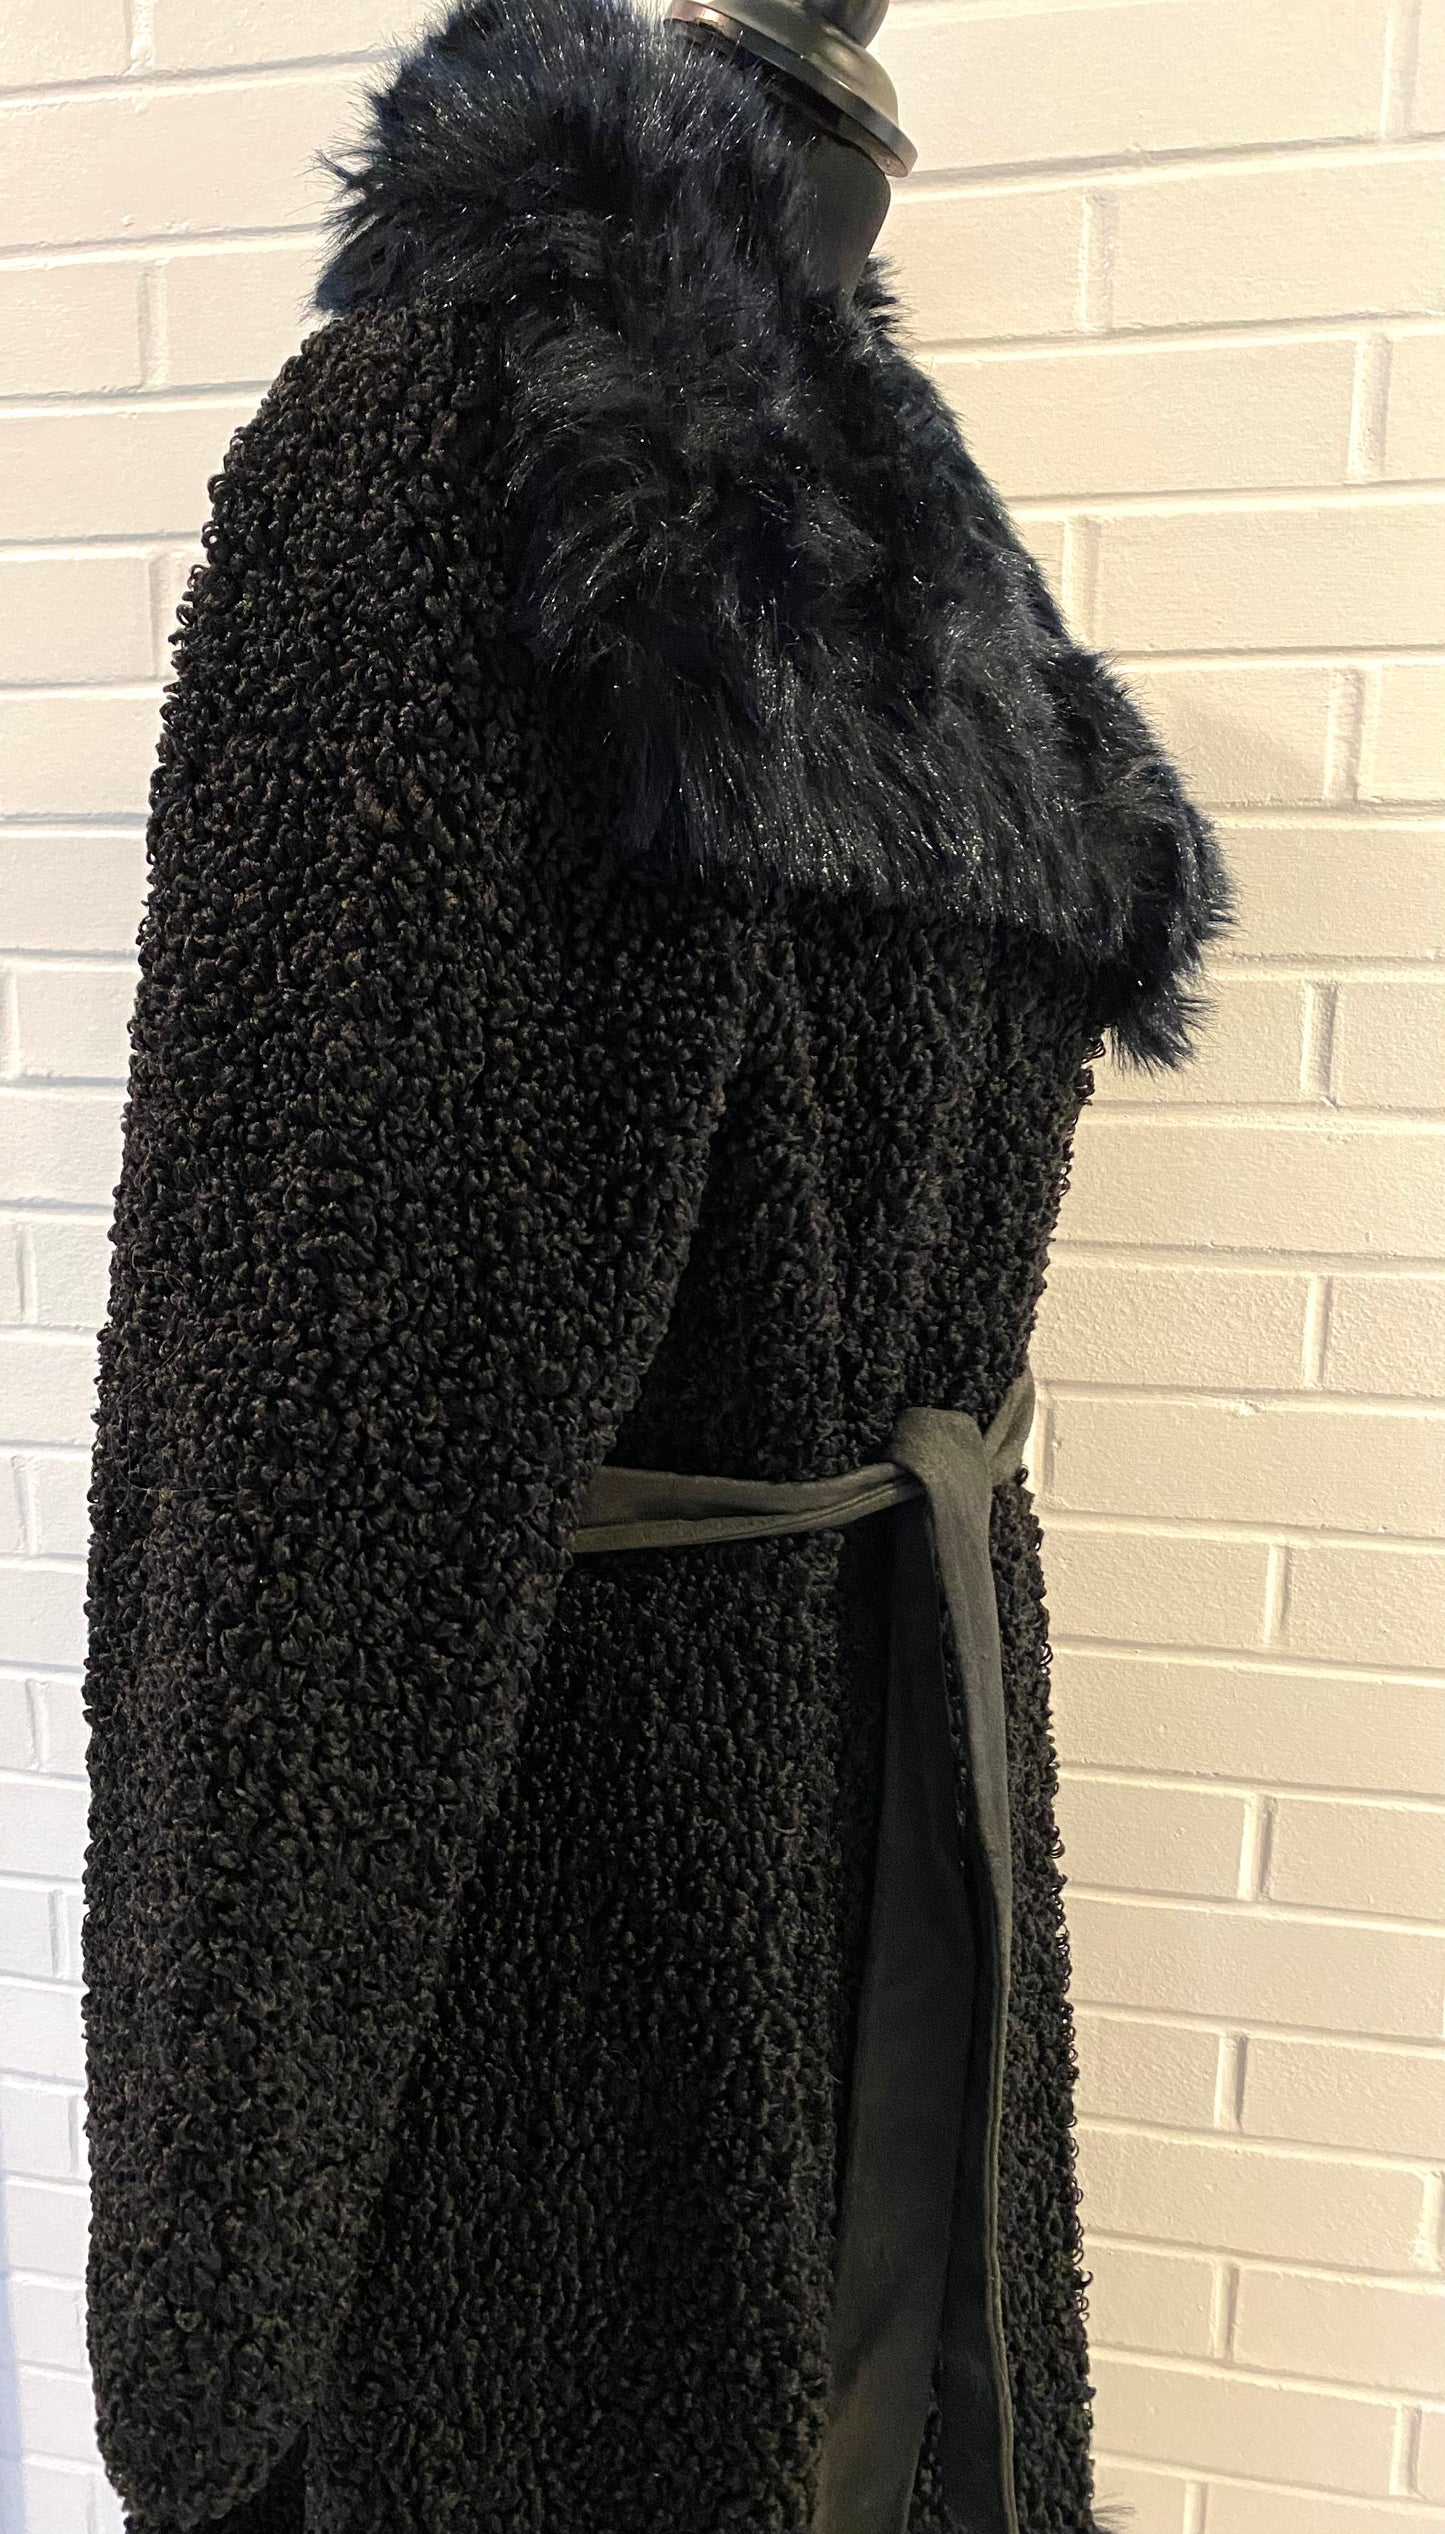 Late 40s/ Early 50s Lenari Designed Faux Fur Coat